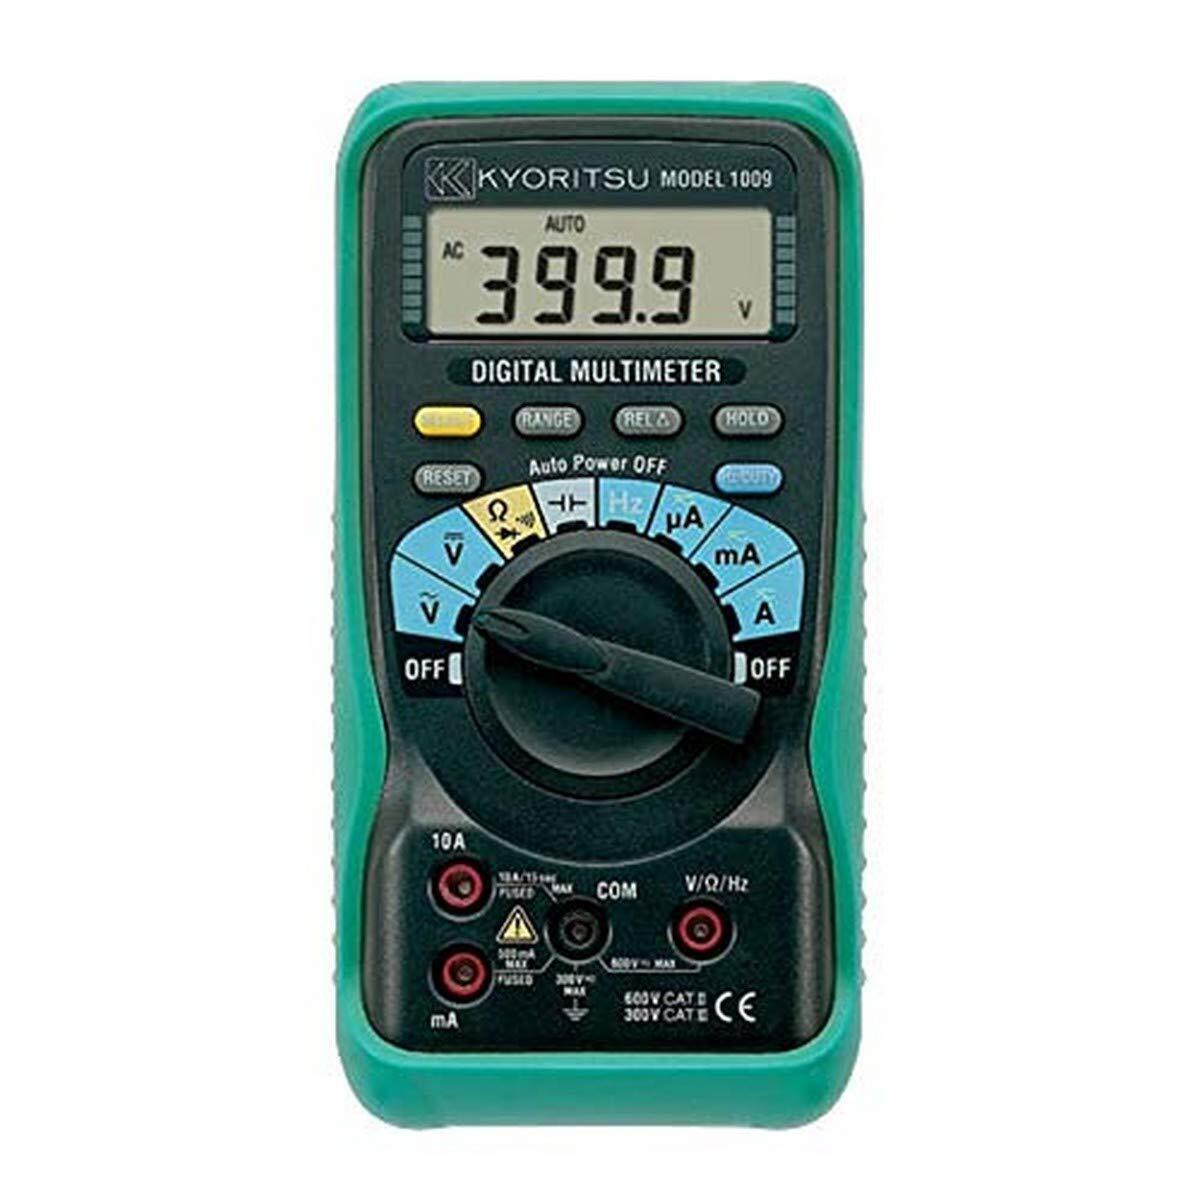 Kyoritsu Electric Measurements Digital Multimeter Model 1009 Black Green Green